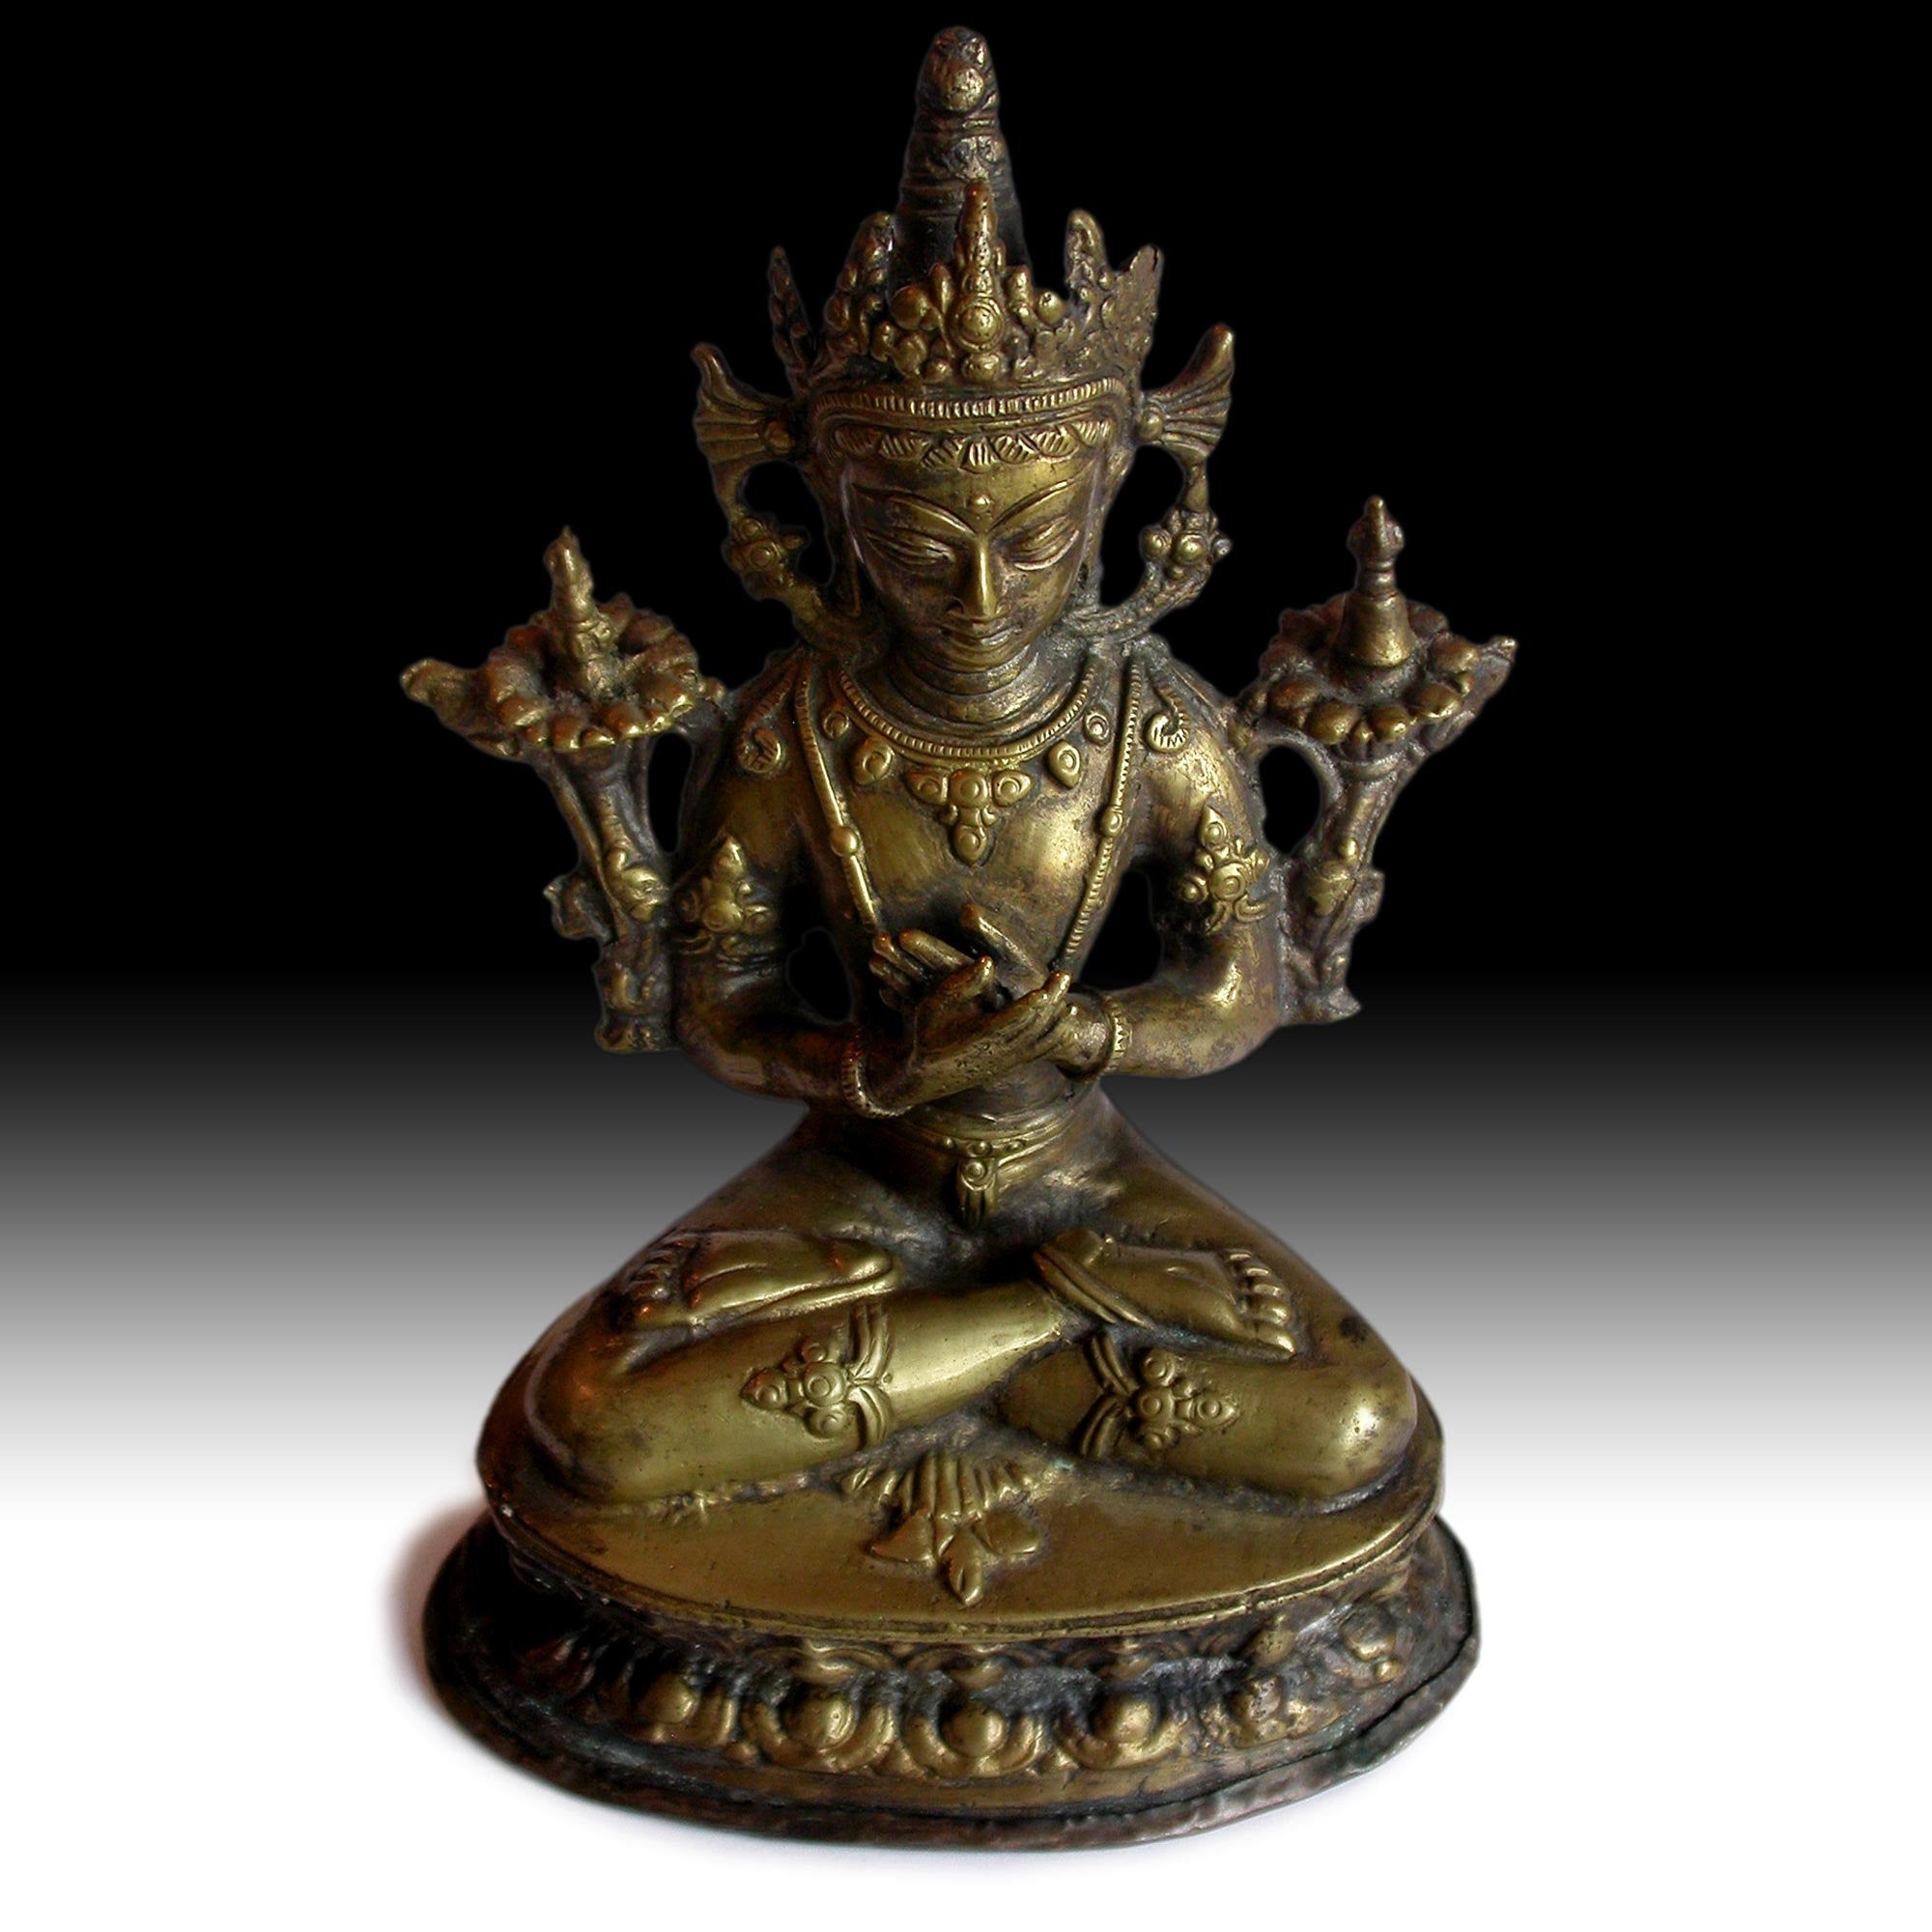 Vajradhara Thunder Bolt Enlightenment Buddha Vintage Nepalese Bronze Statue 多杰羌佛